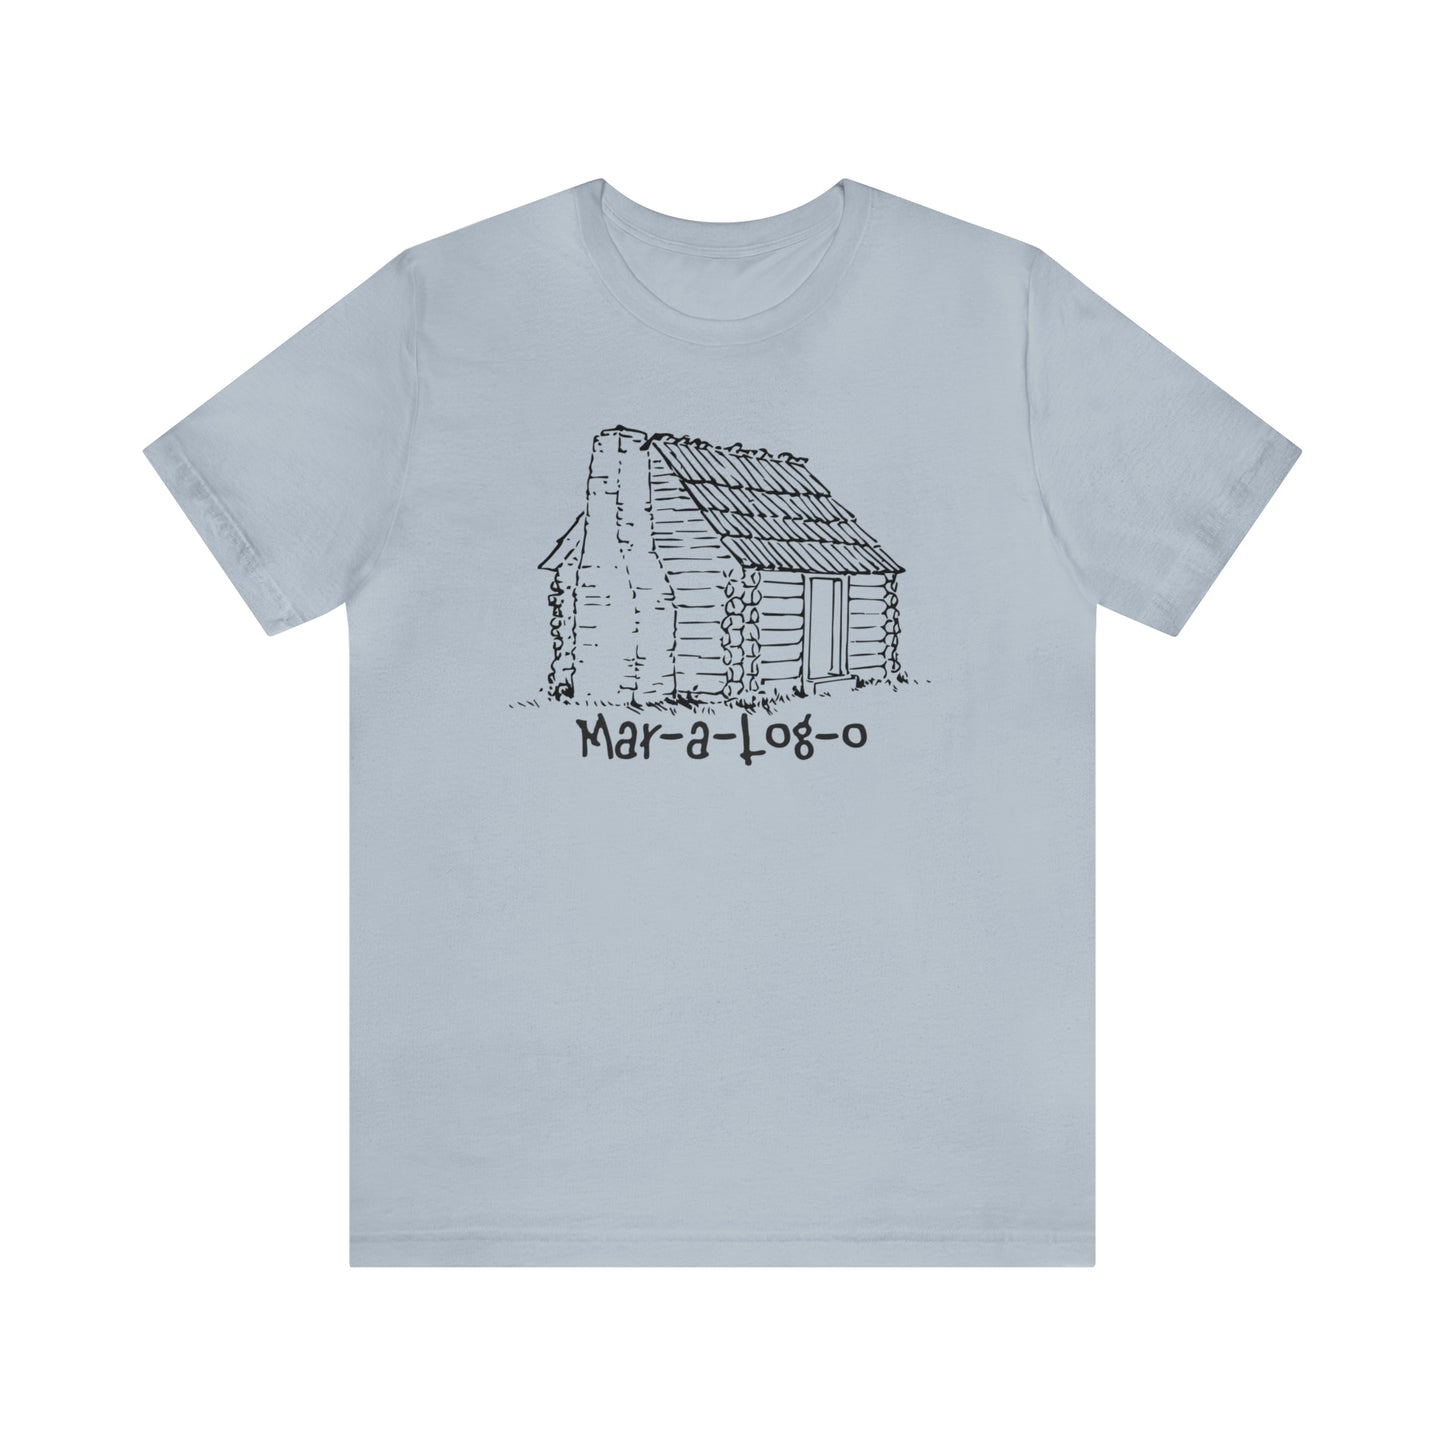 Mar-a-Log-o - Unisex T-Shirt